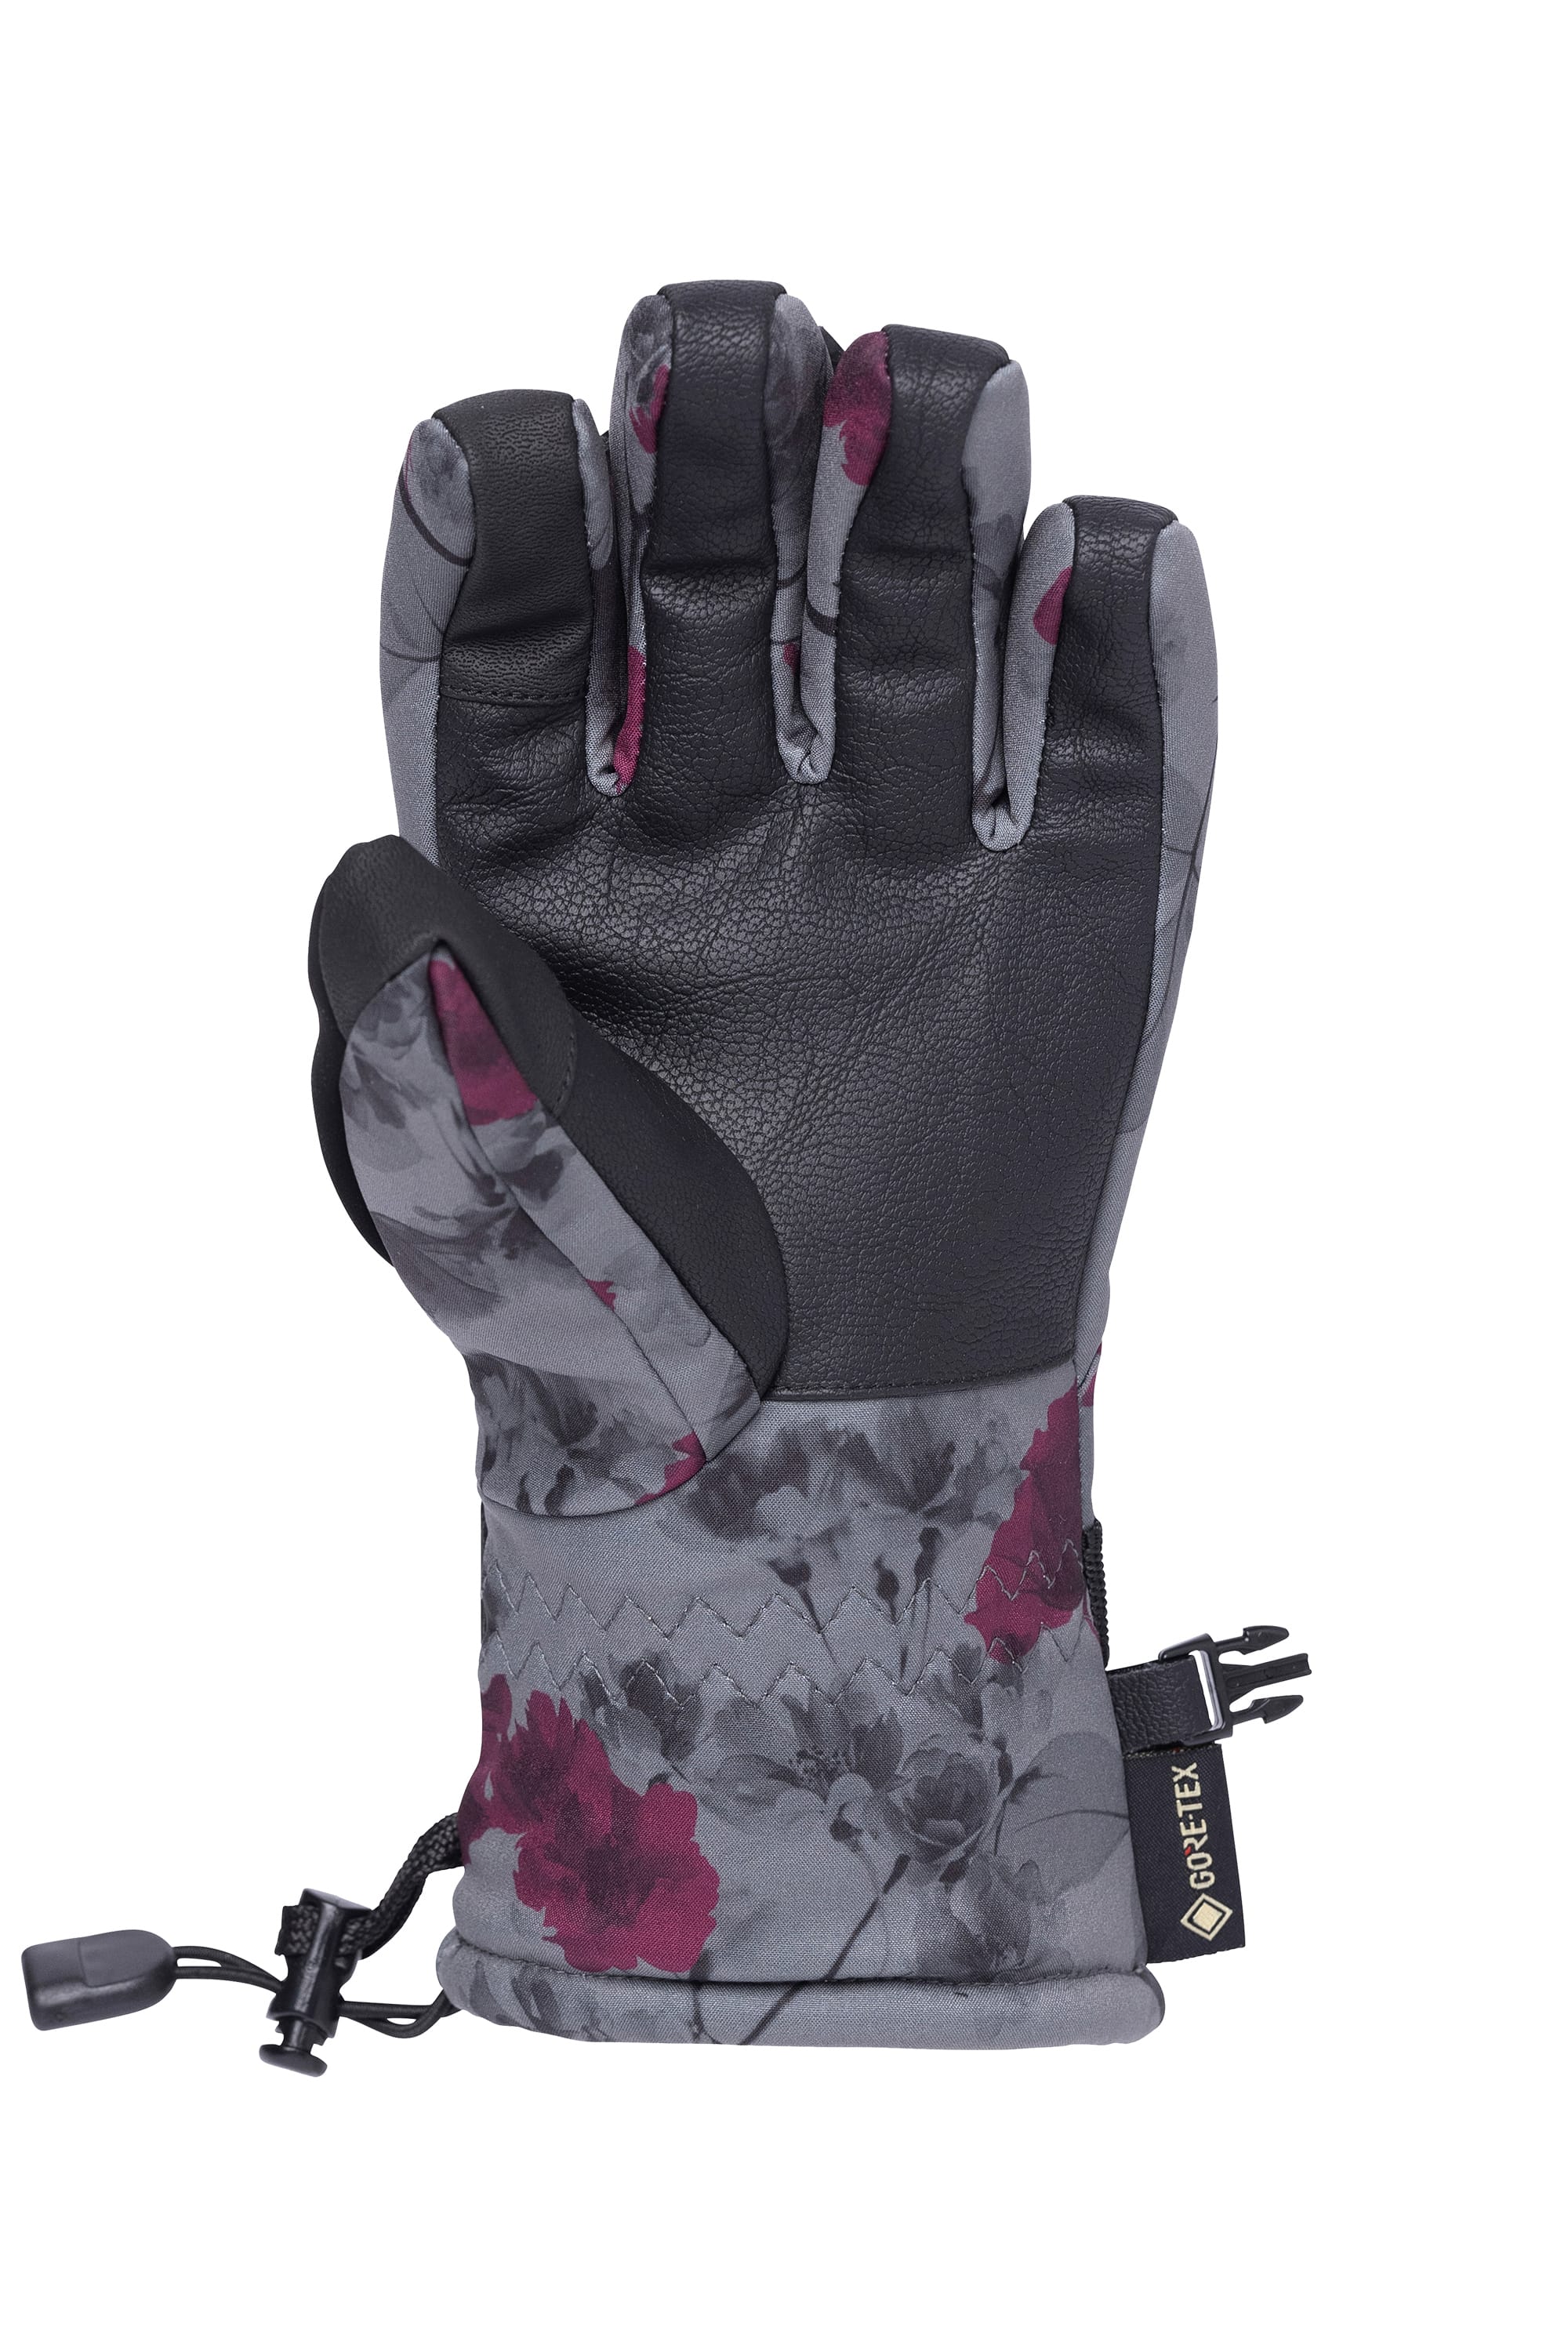 686 Women's GORE-TEX Linear Glove - 88 Gear